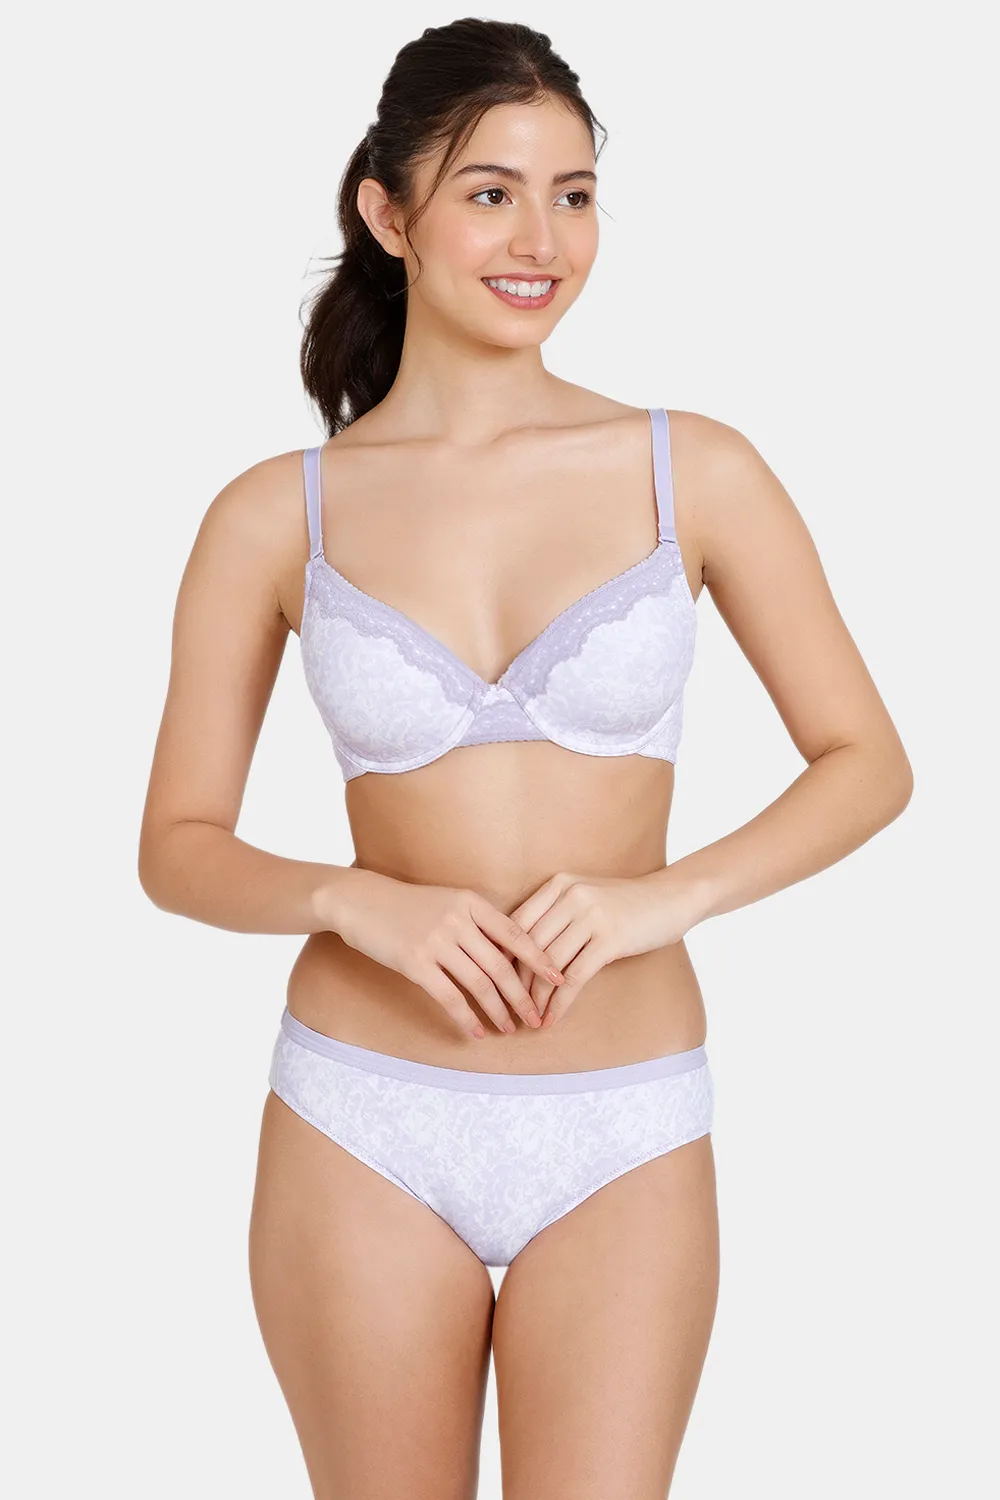 white cotton bra and panty set